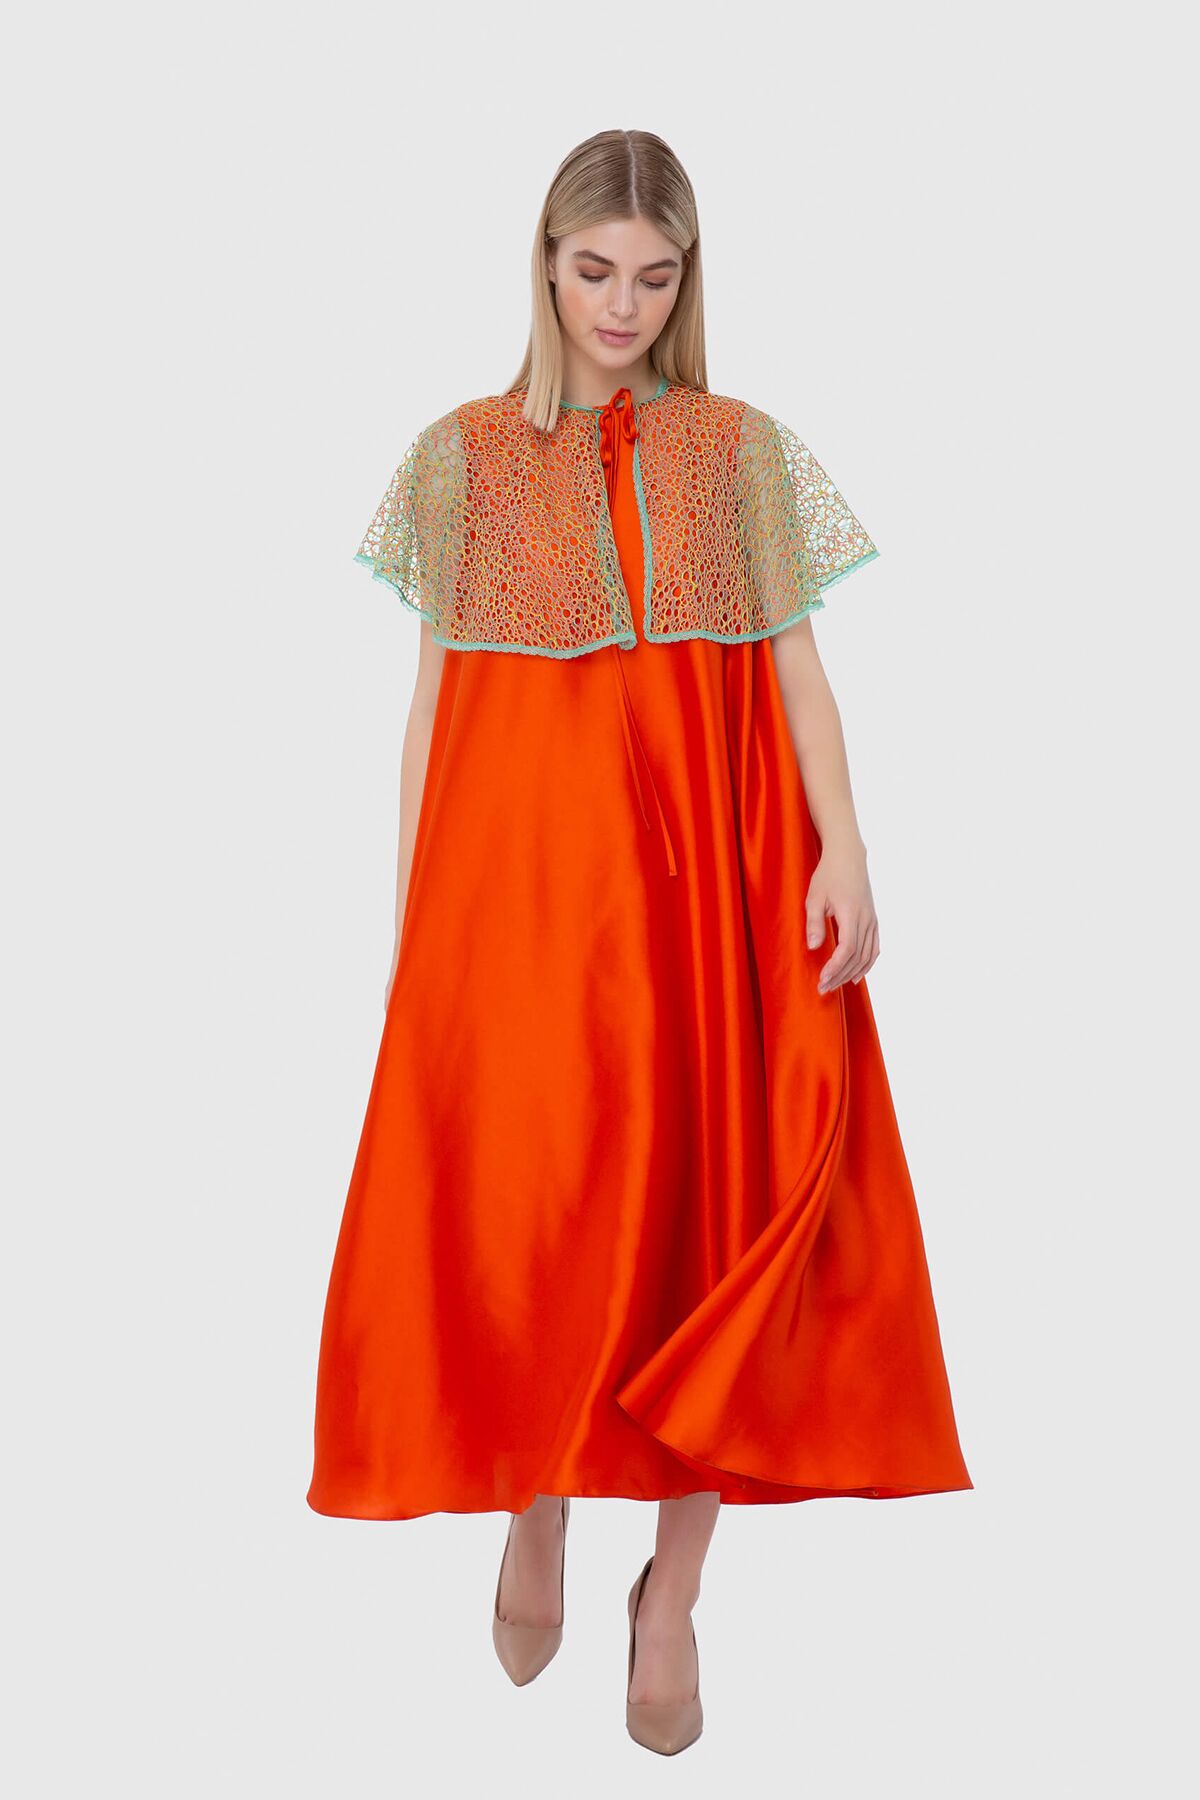 MANI MANI - Orange Cape Dress With Collar Detail